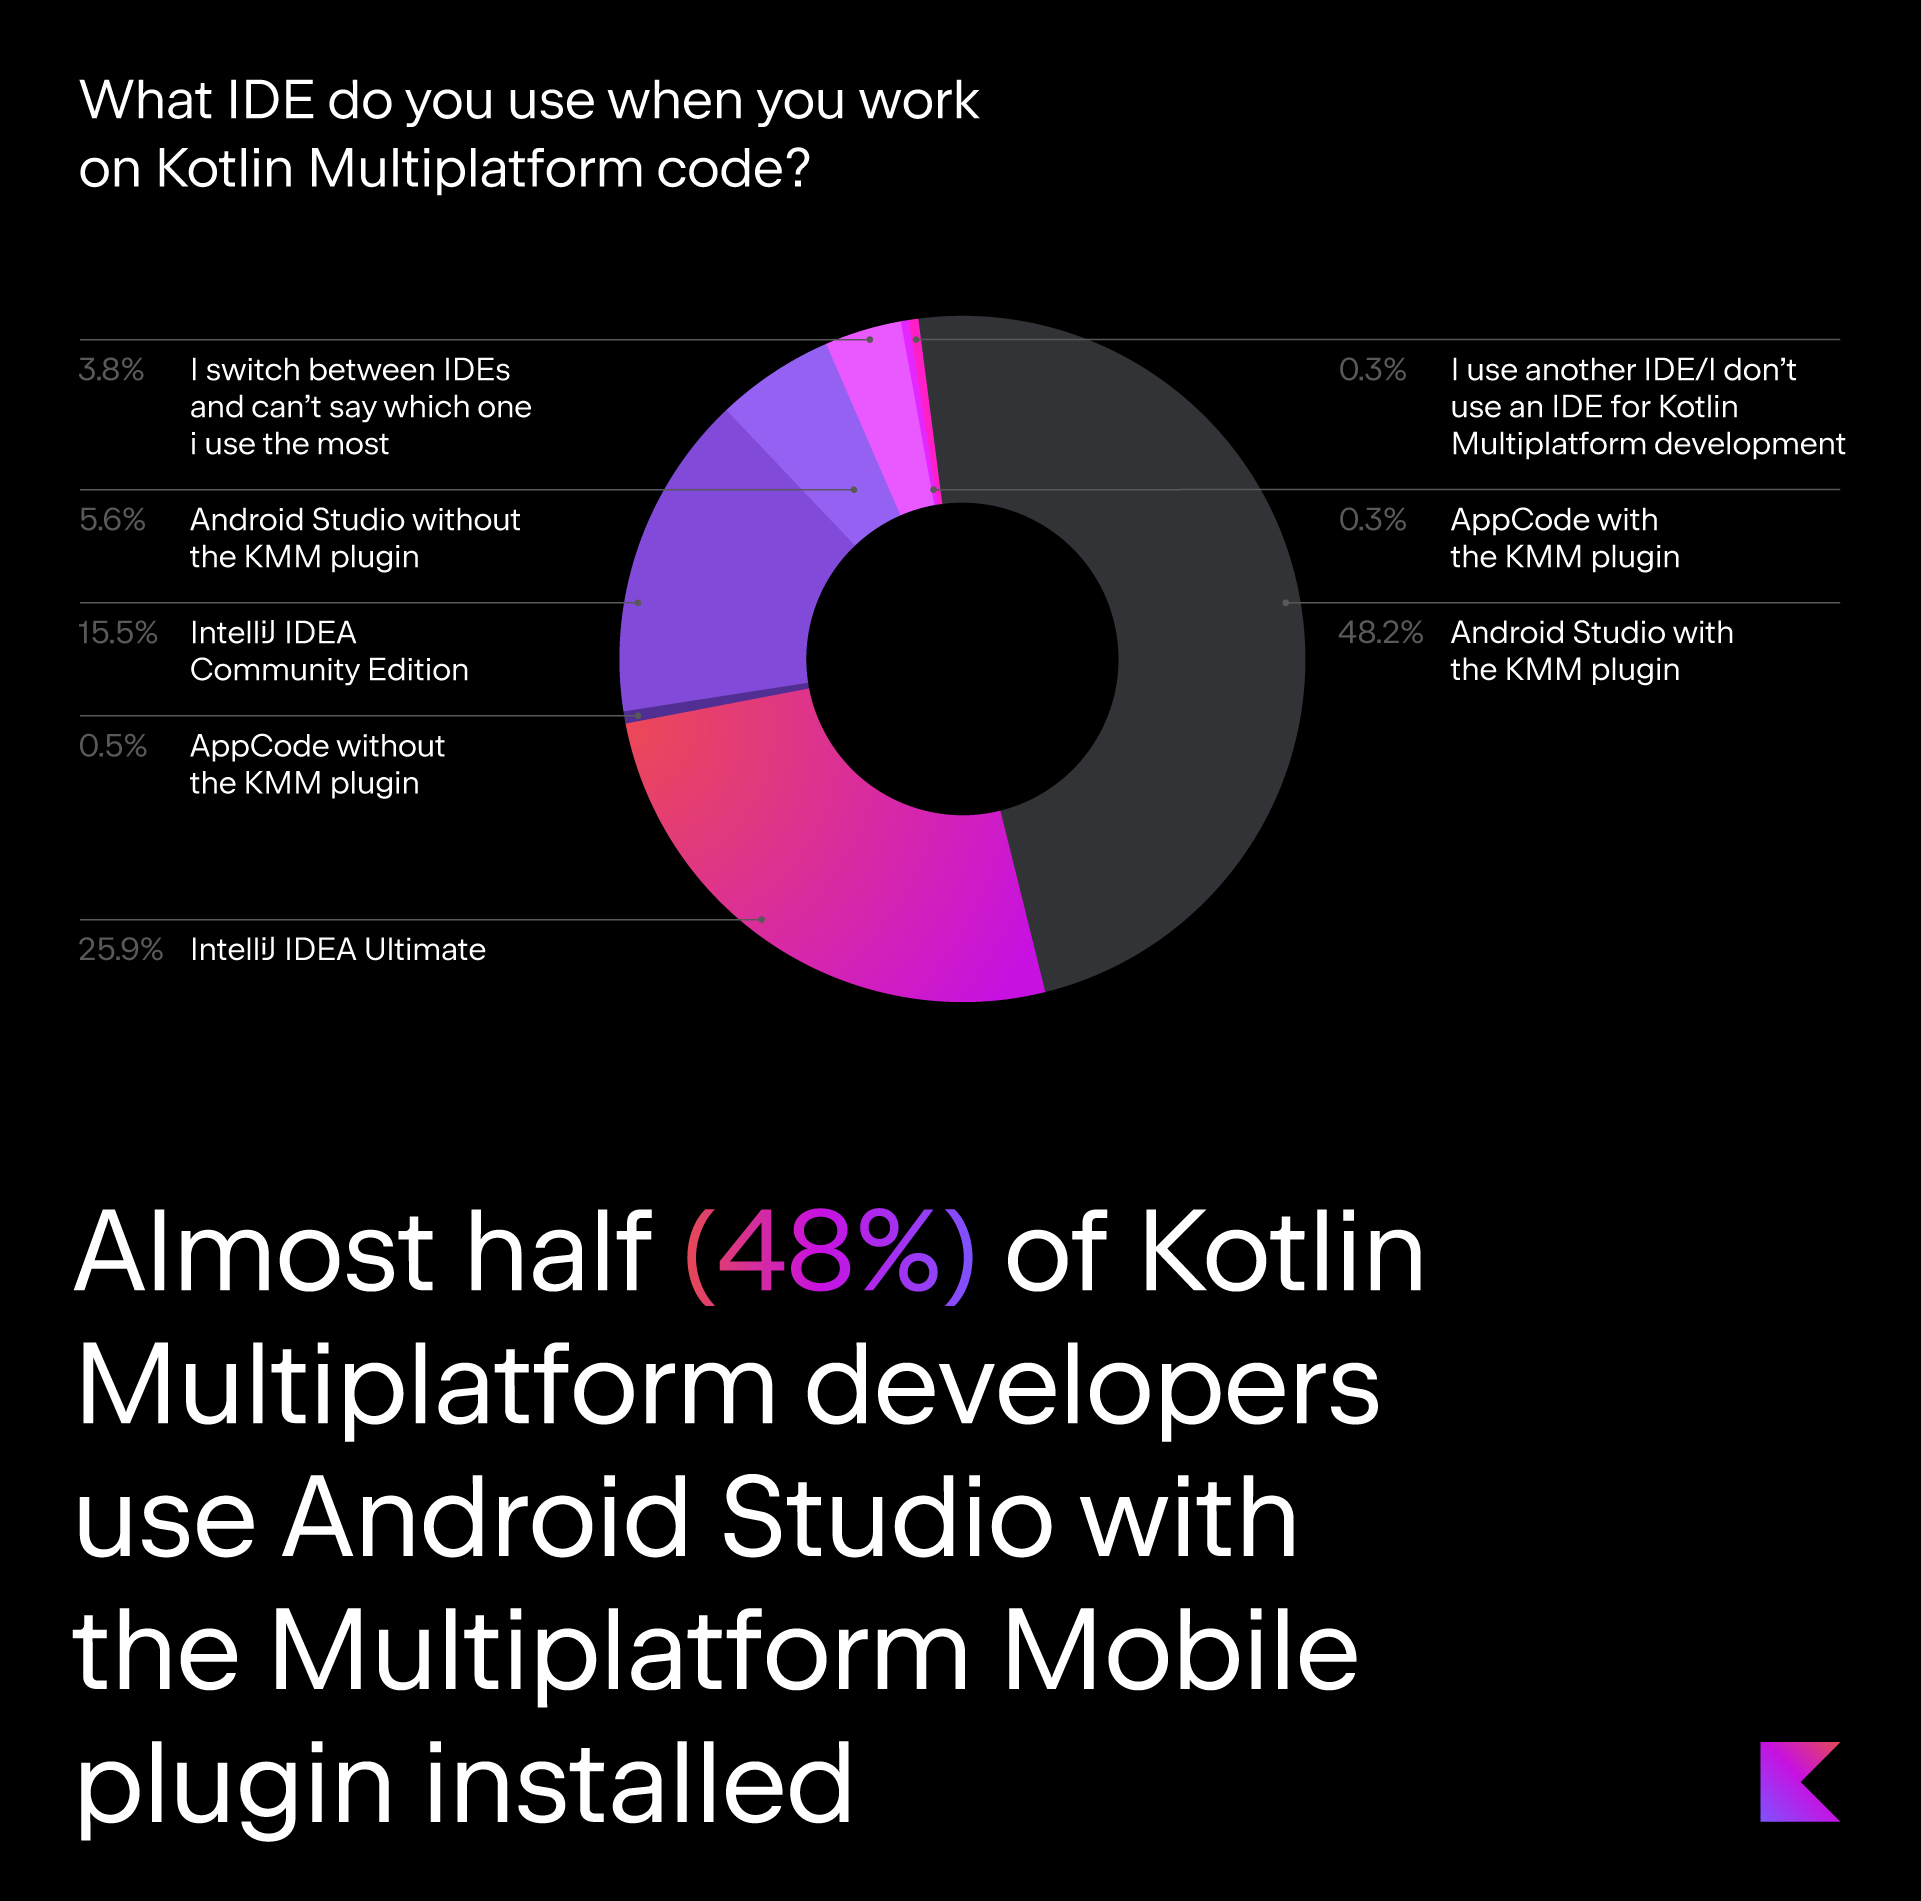 Almost half (48%) of Kotlin Multiplatform developers use Android Studio with the Multiplatform Mobile plugin installed